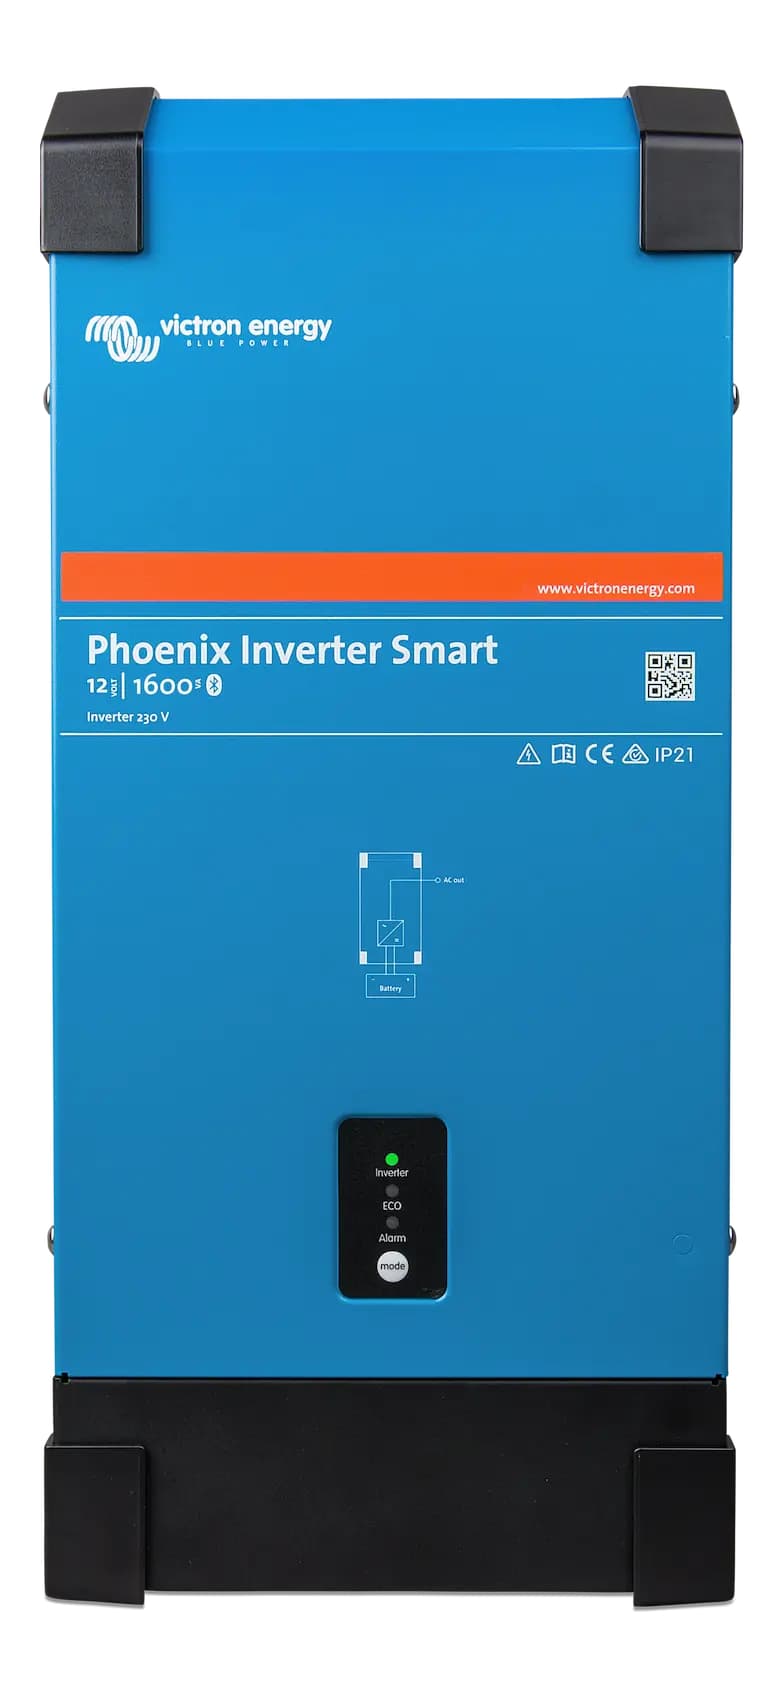 Phoenix Inverter 230V Smart